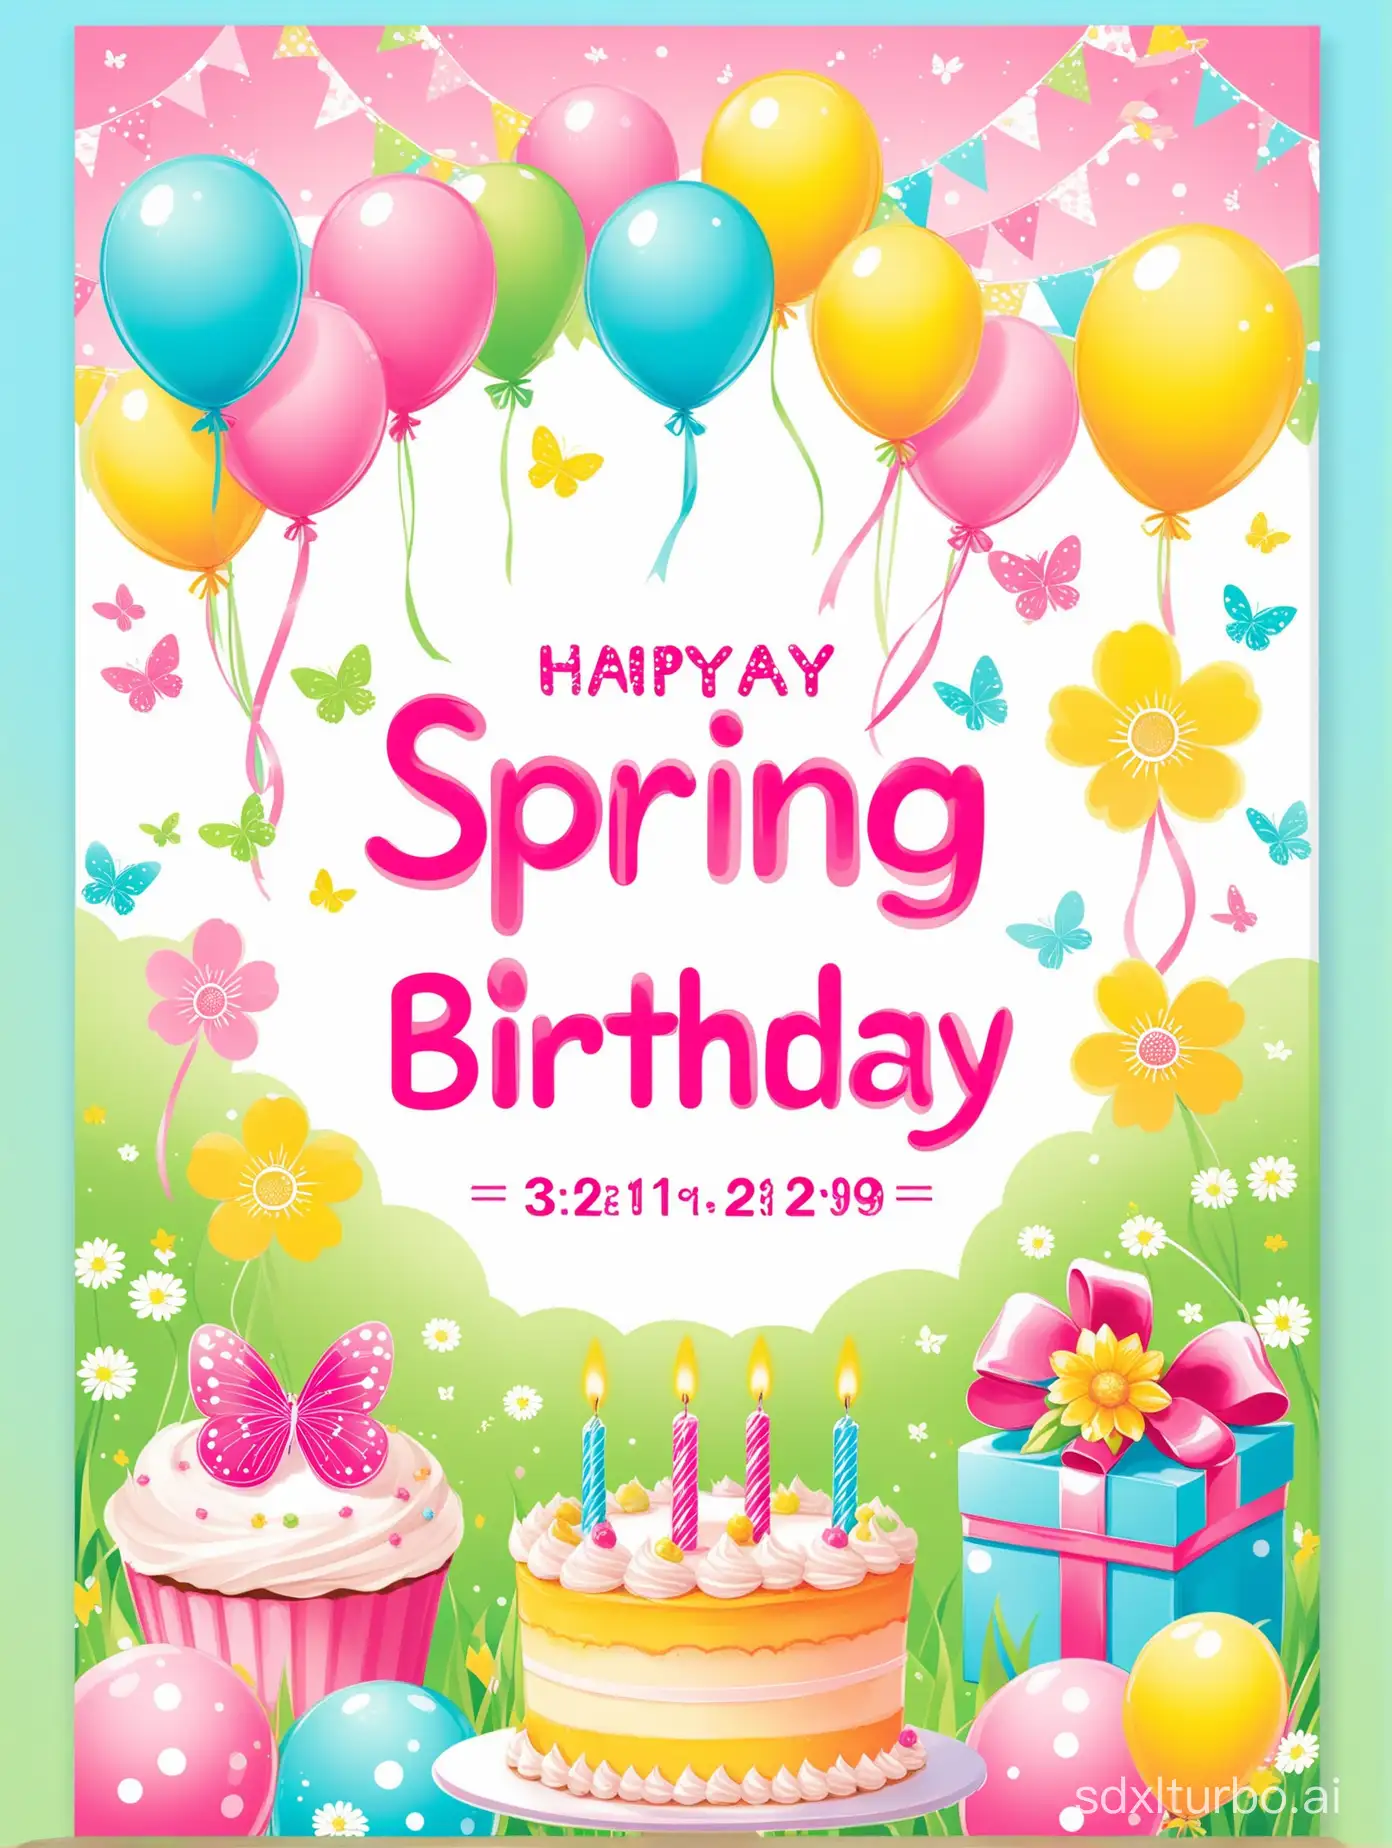 Joyful-Spring-Birthday-Celebration-with-Colorful-Decorations